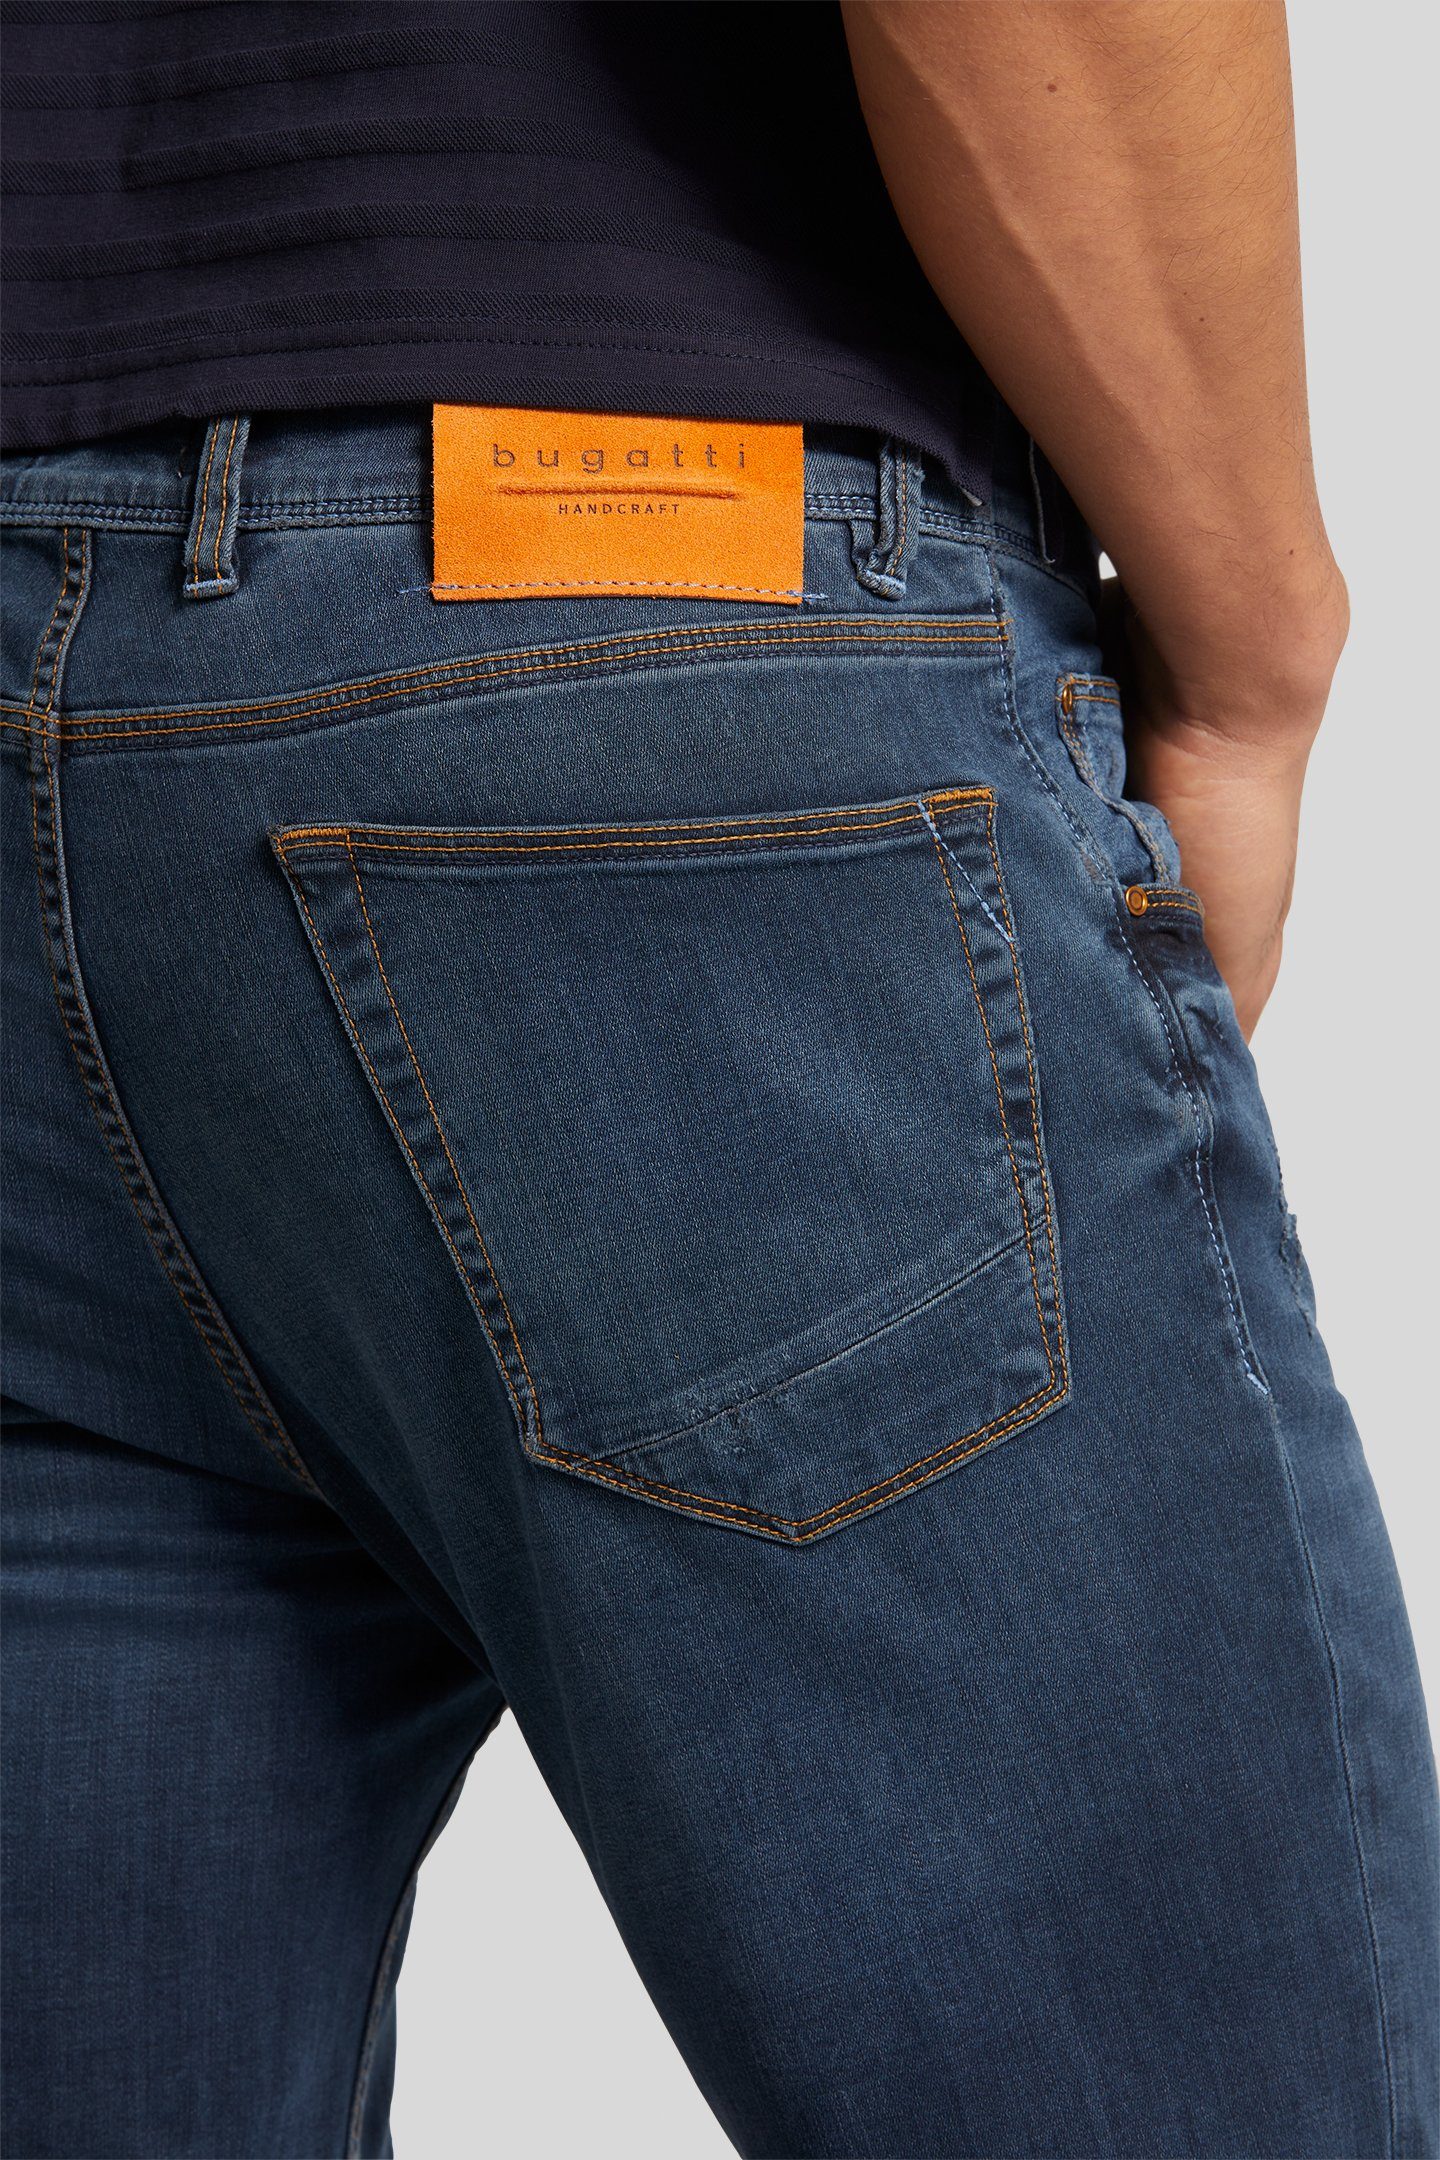 Respect 5-Pocket-Jeans Kollektion dunkelblau Nature aus bugatti der